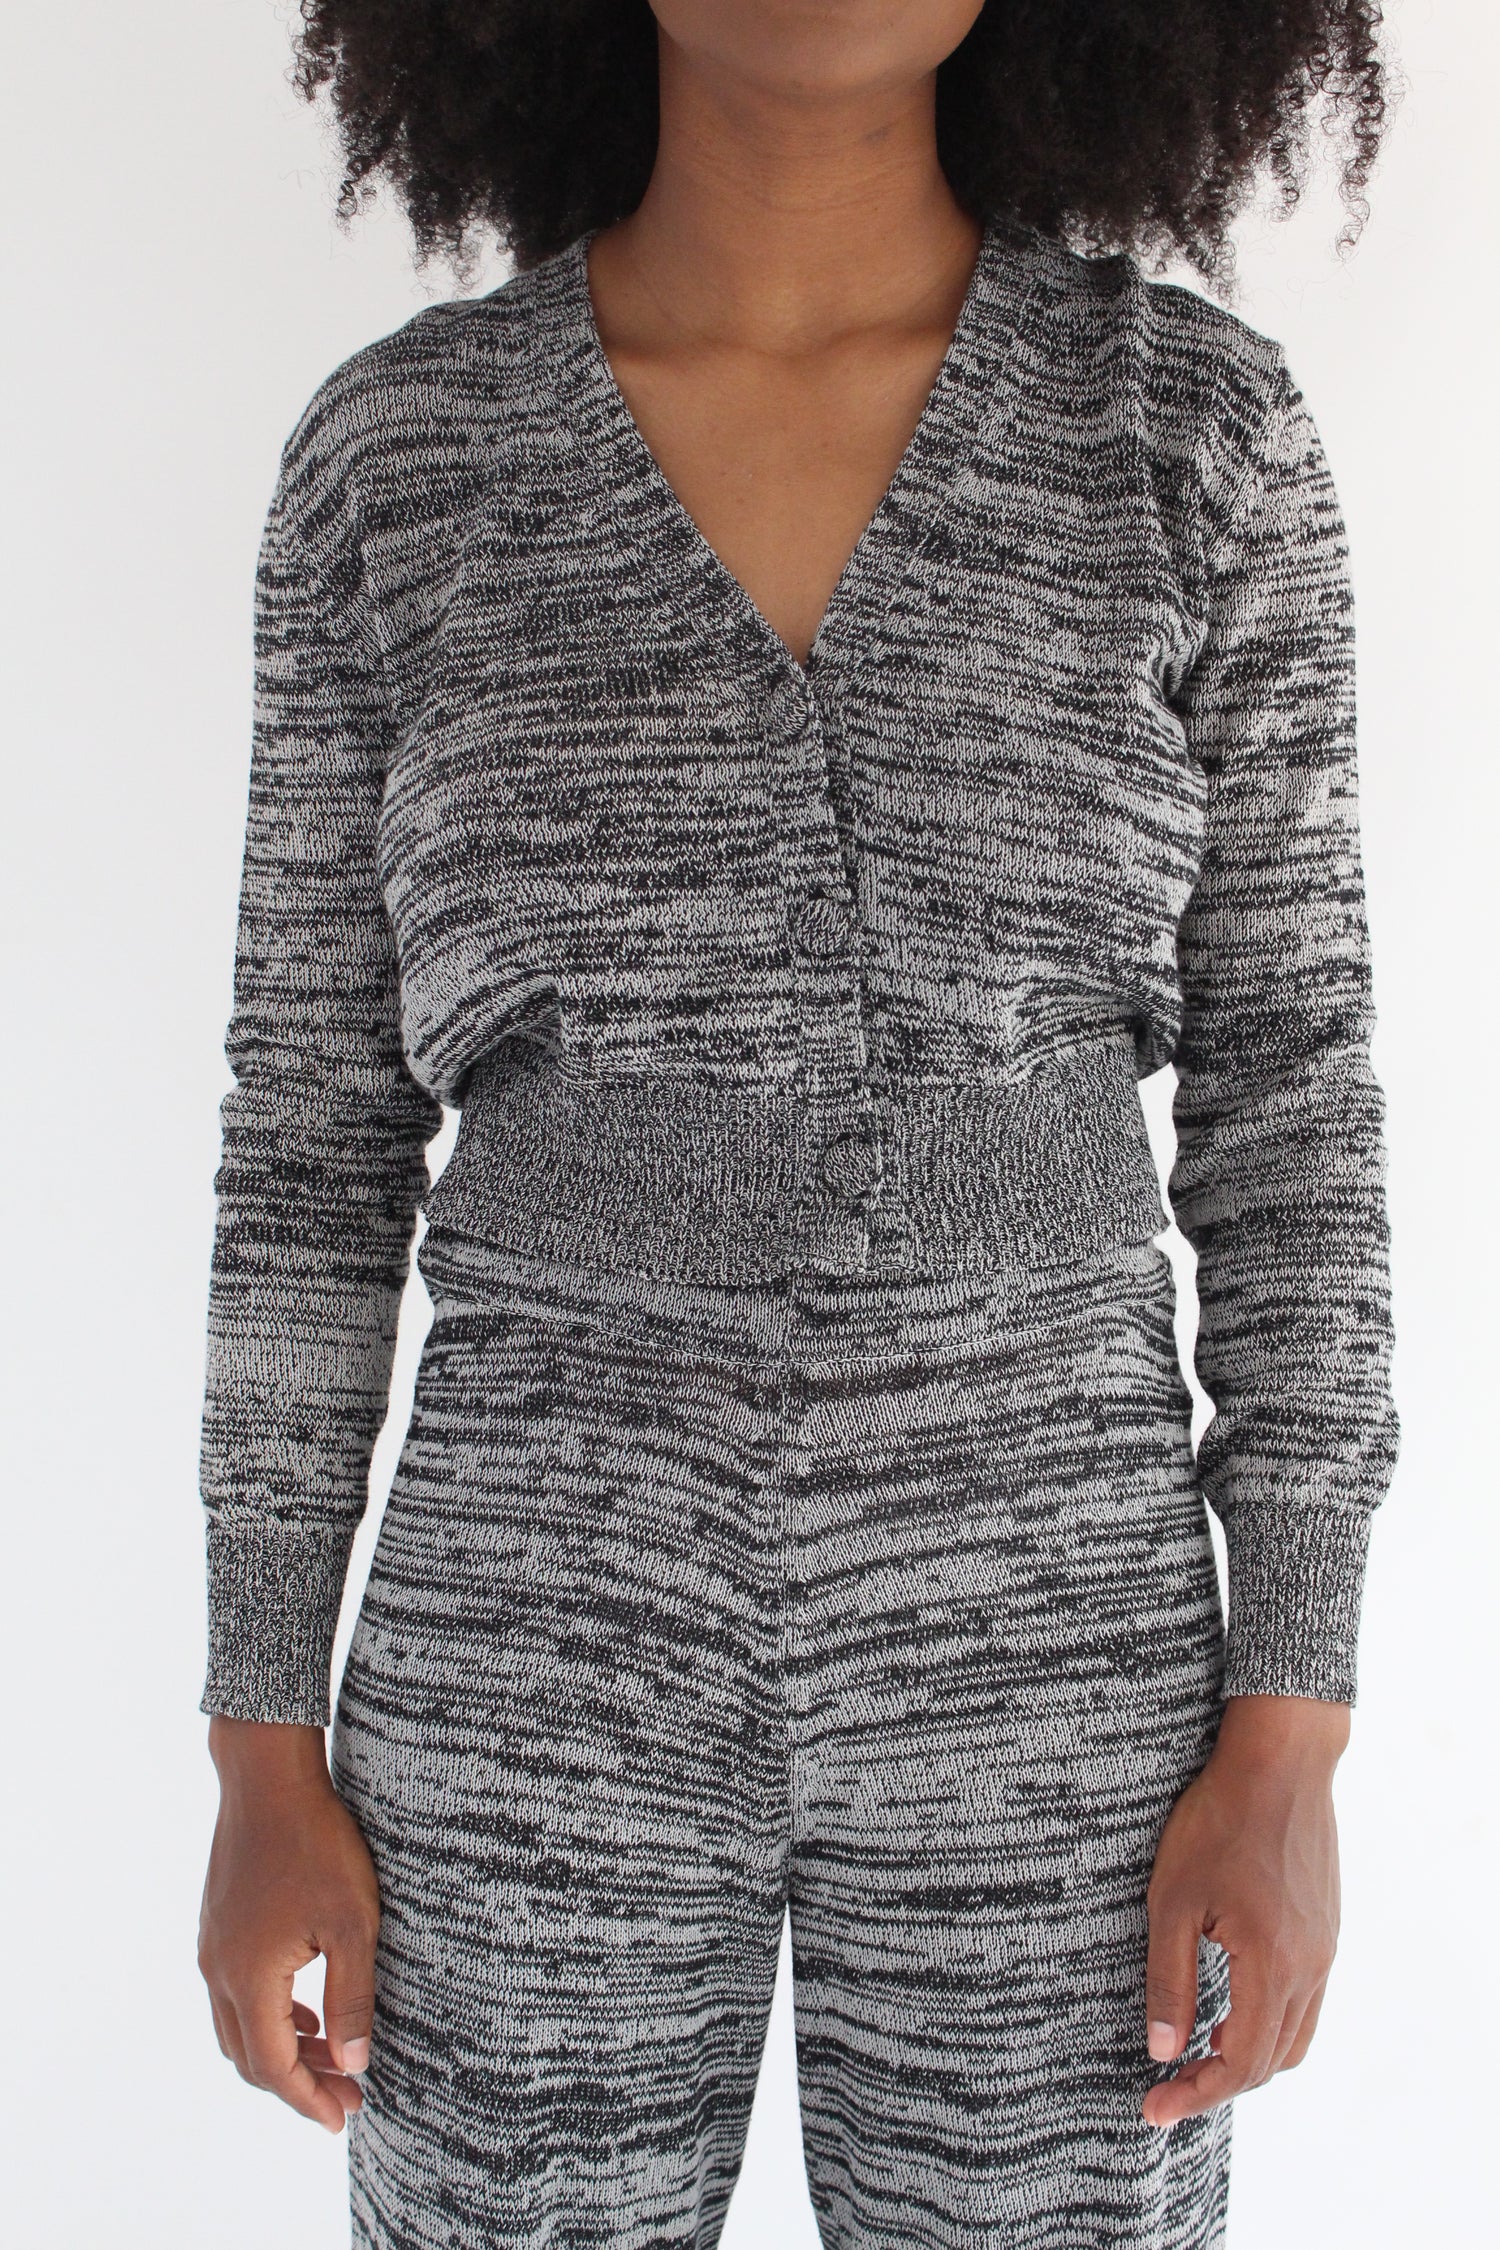 Beklina Cotton Knit Cardigan Black/Grey